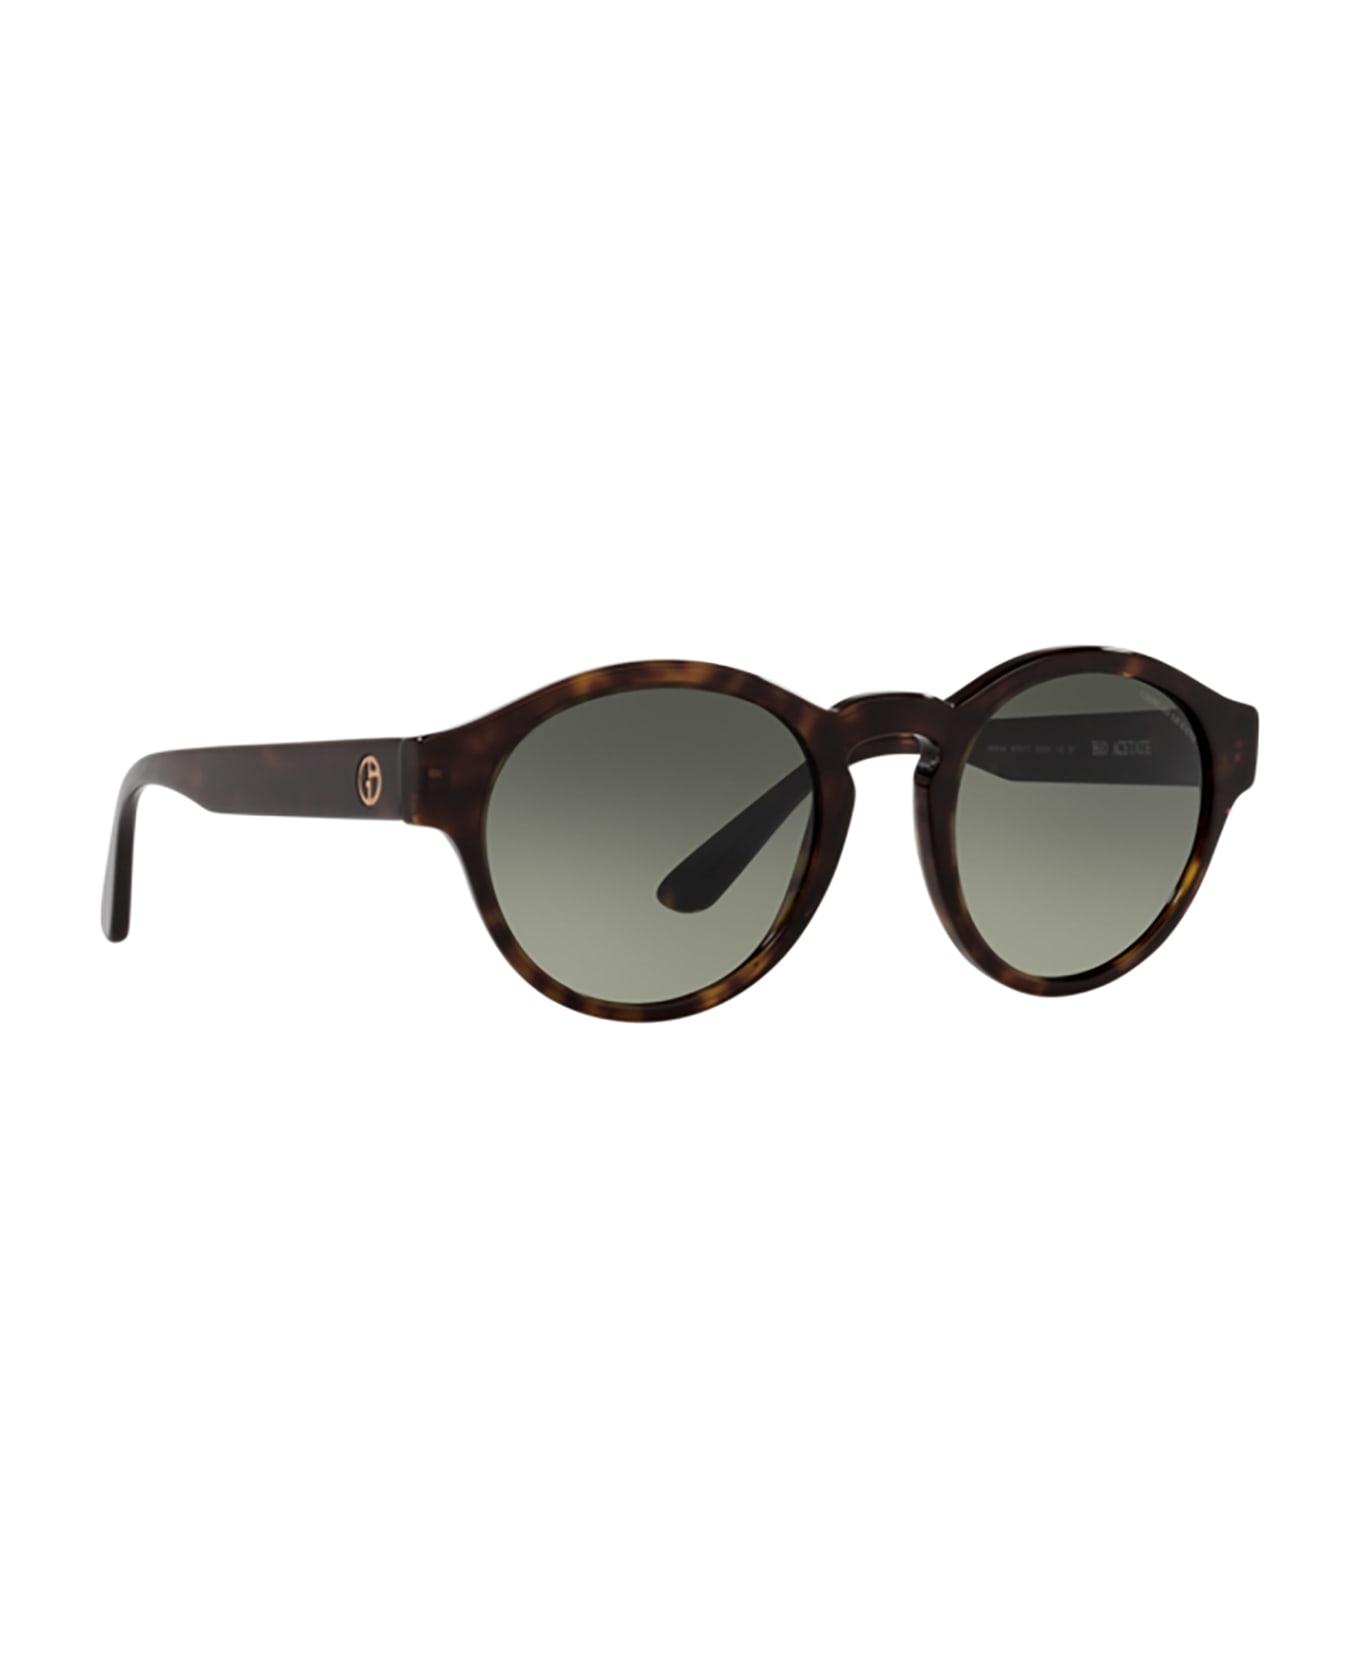 Giorgio Armani Ar8146 Havana Sunglasses - Havana